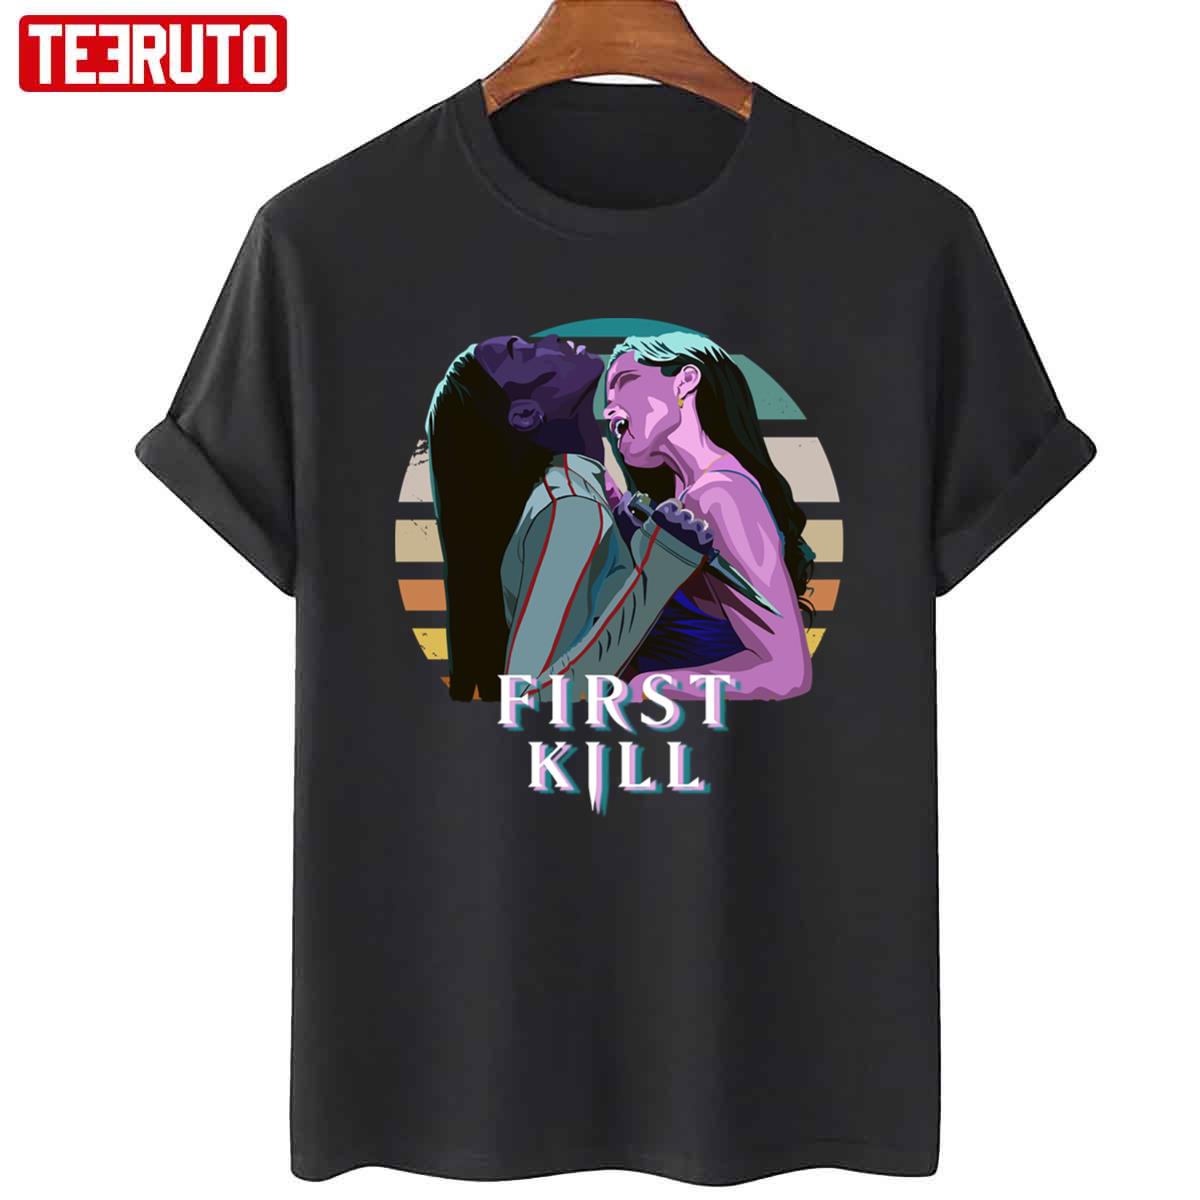 Juliette & Calliope First Kill On Retro Sunset Unisex T-Shirt